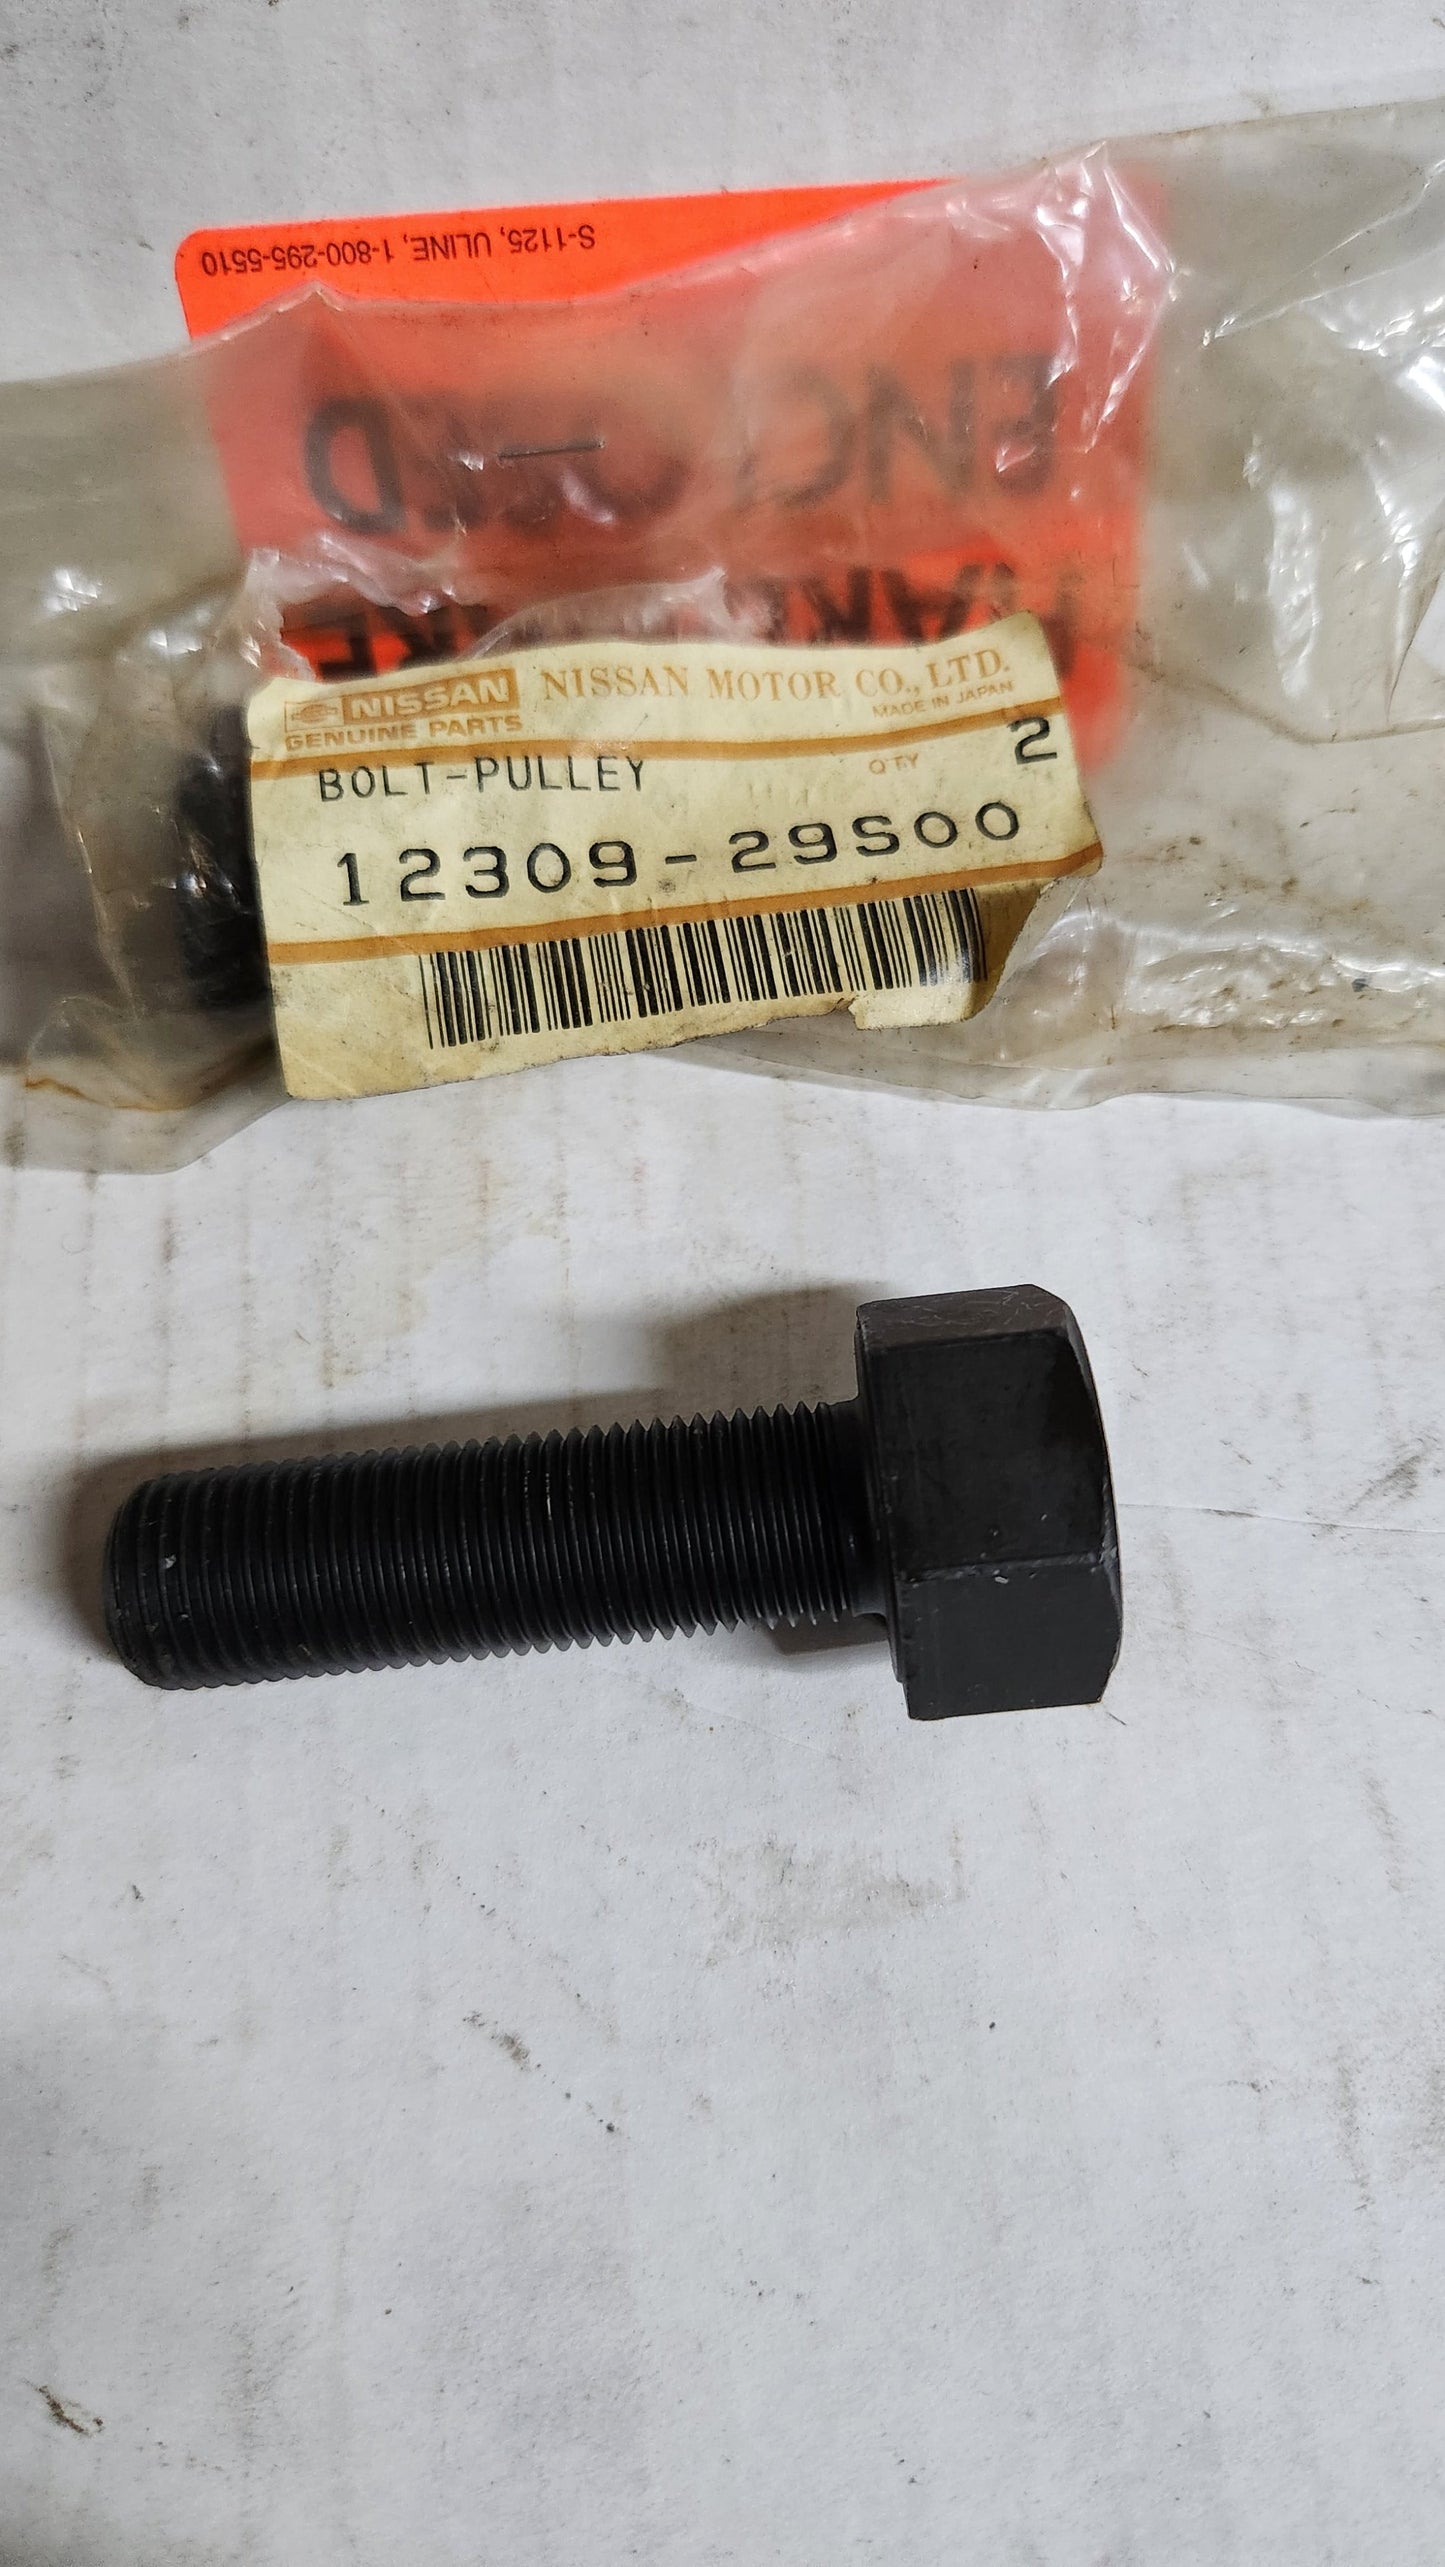 SR20DET/KA24(D)E crank pulley bolt 12309-29S00